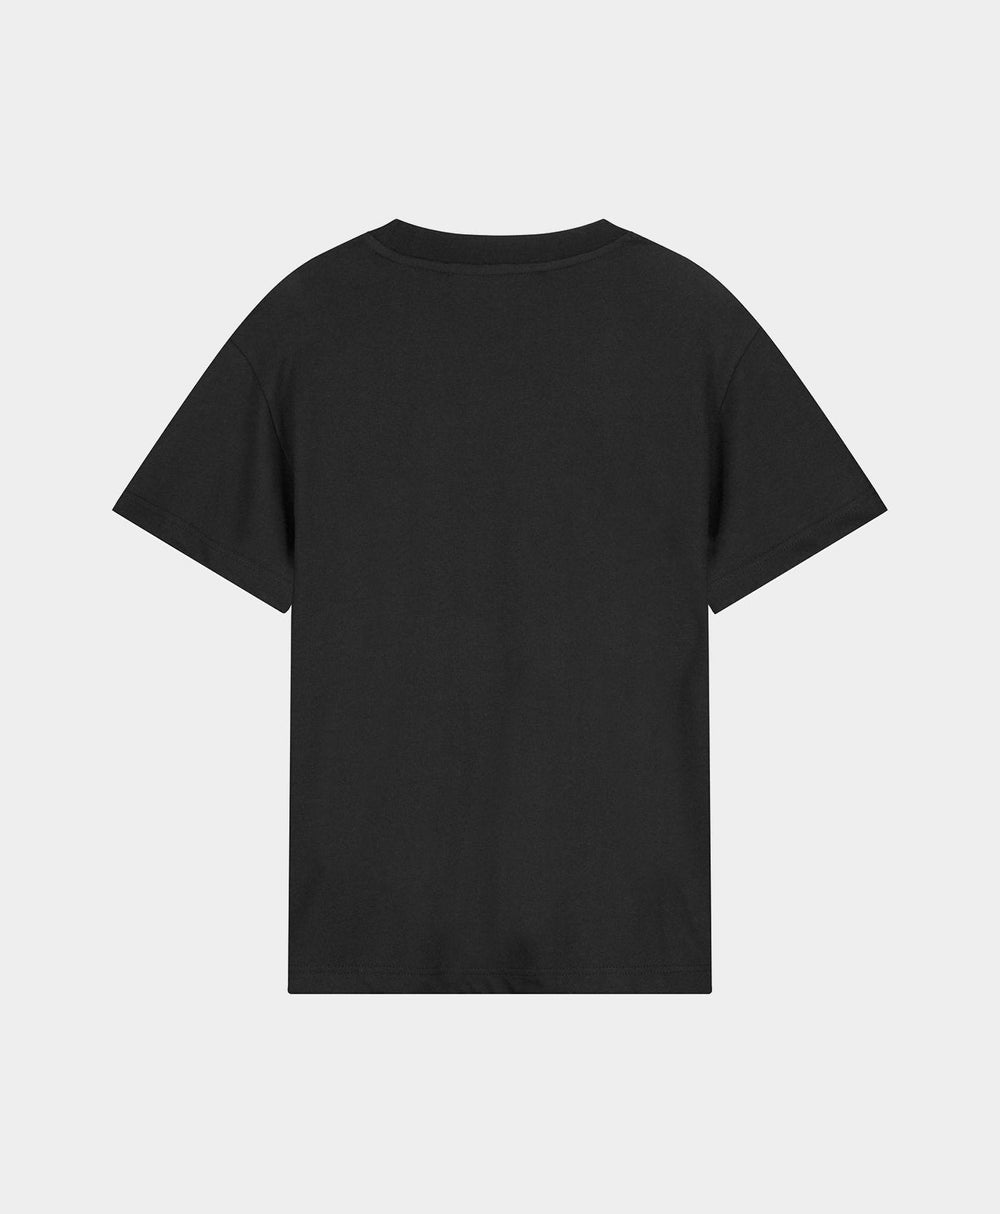 DP - Black Estan T-Shirt - Packshot - Rear